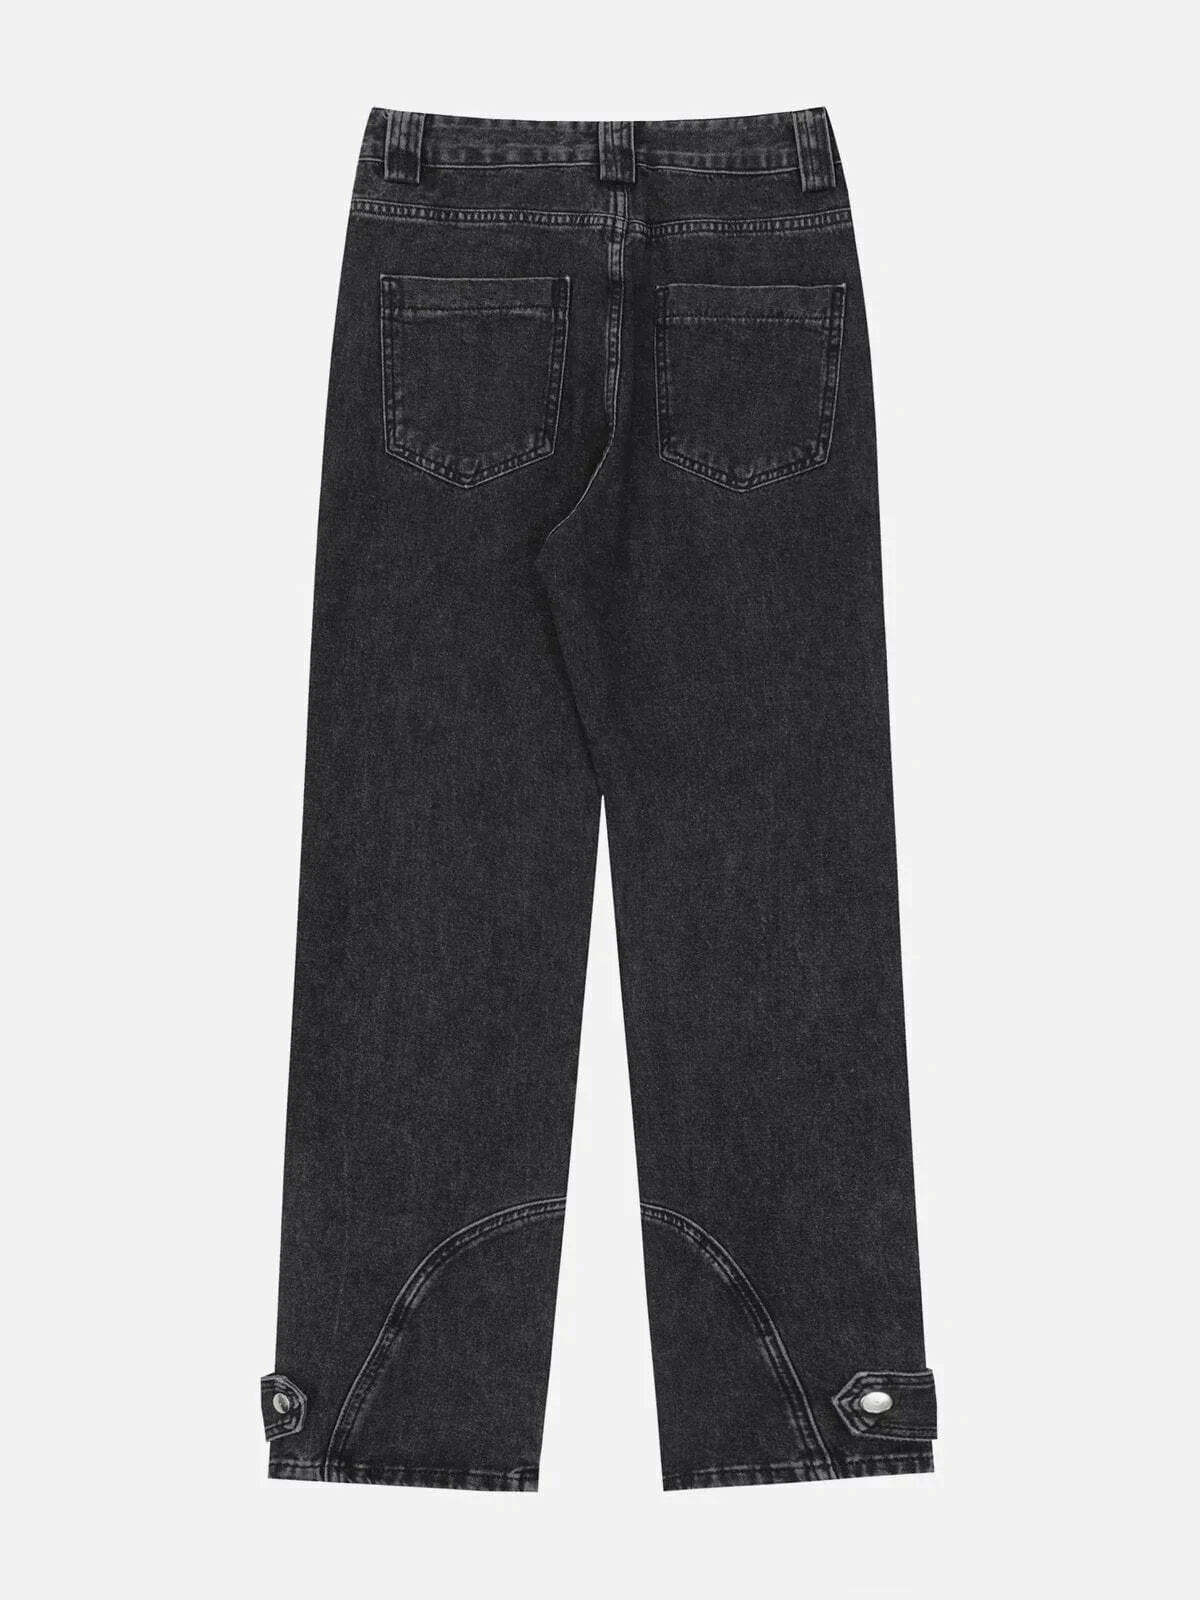 retro line design jeans vintage washed & edgy 5425